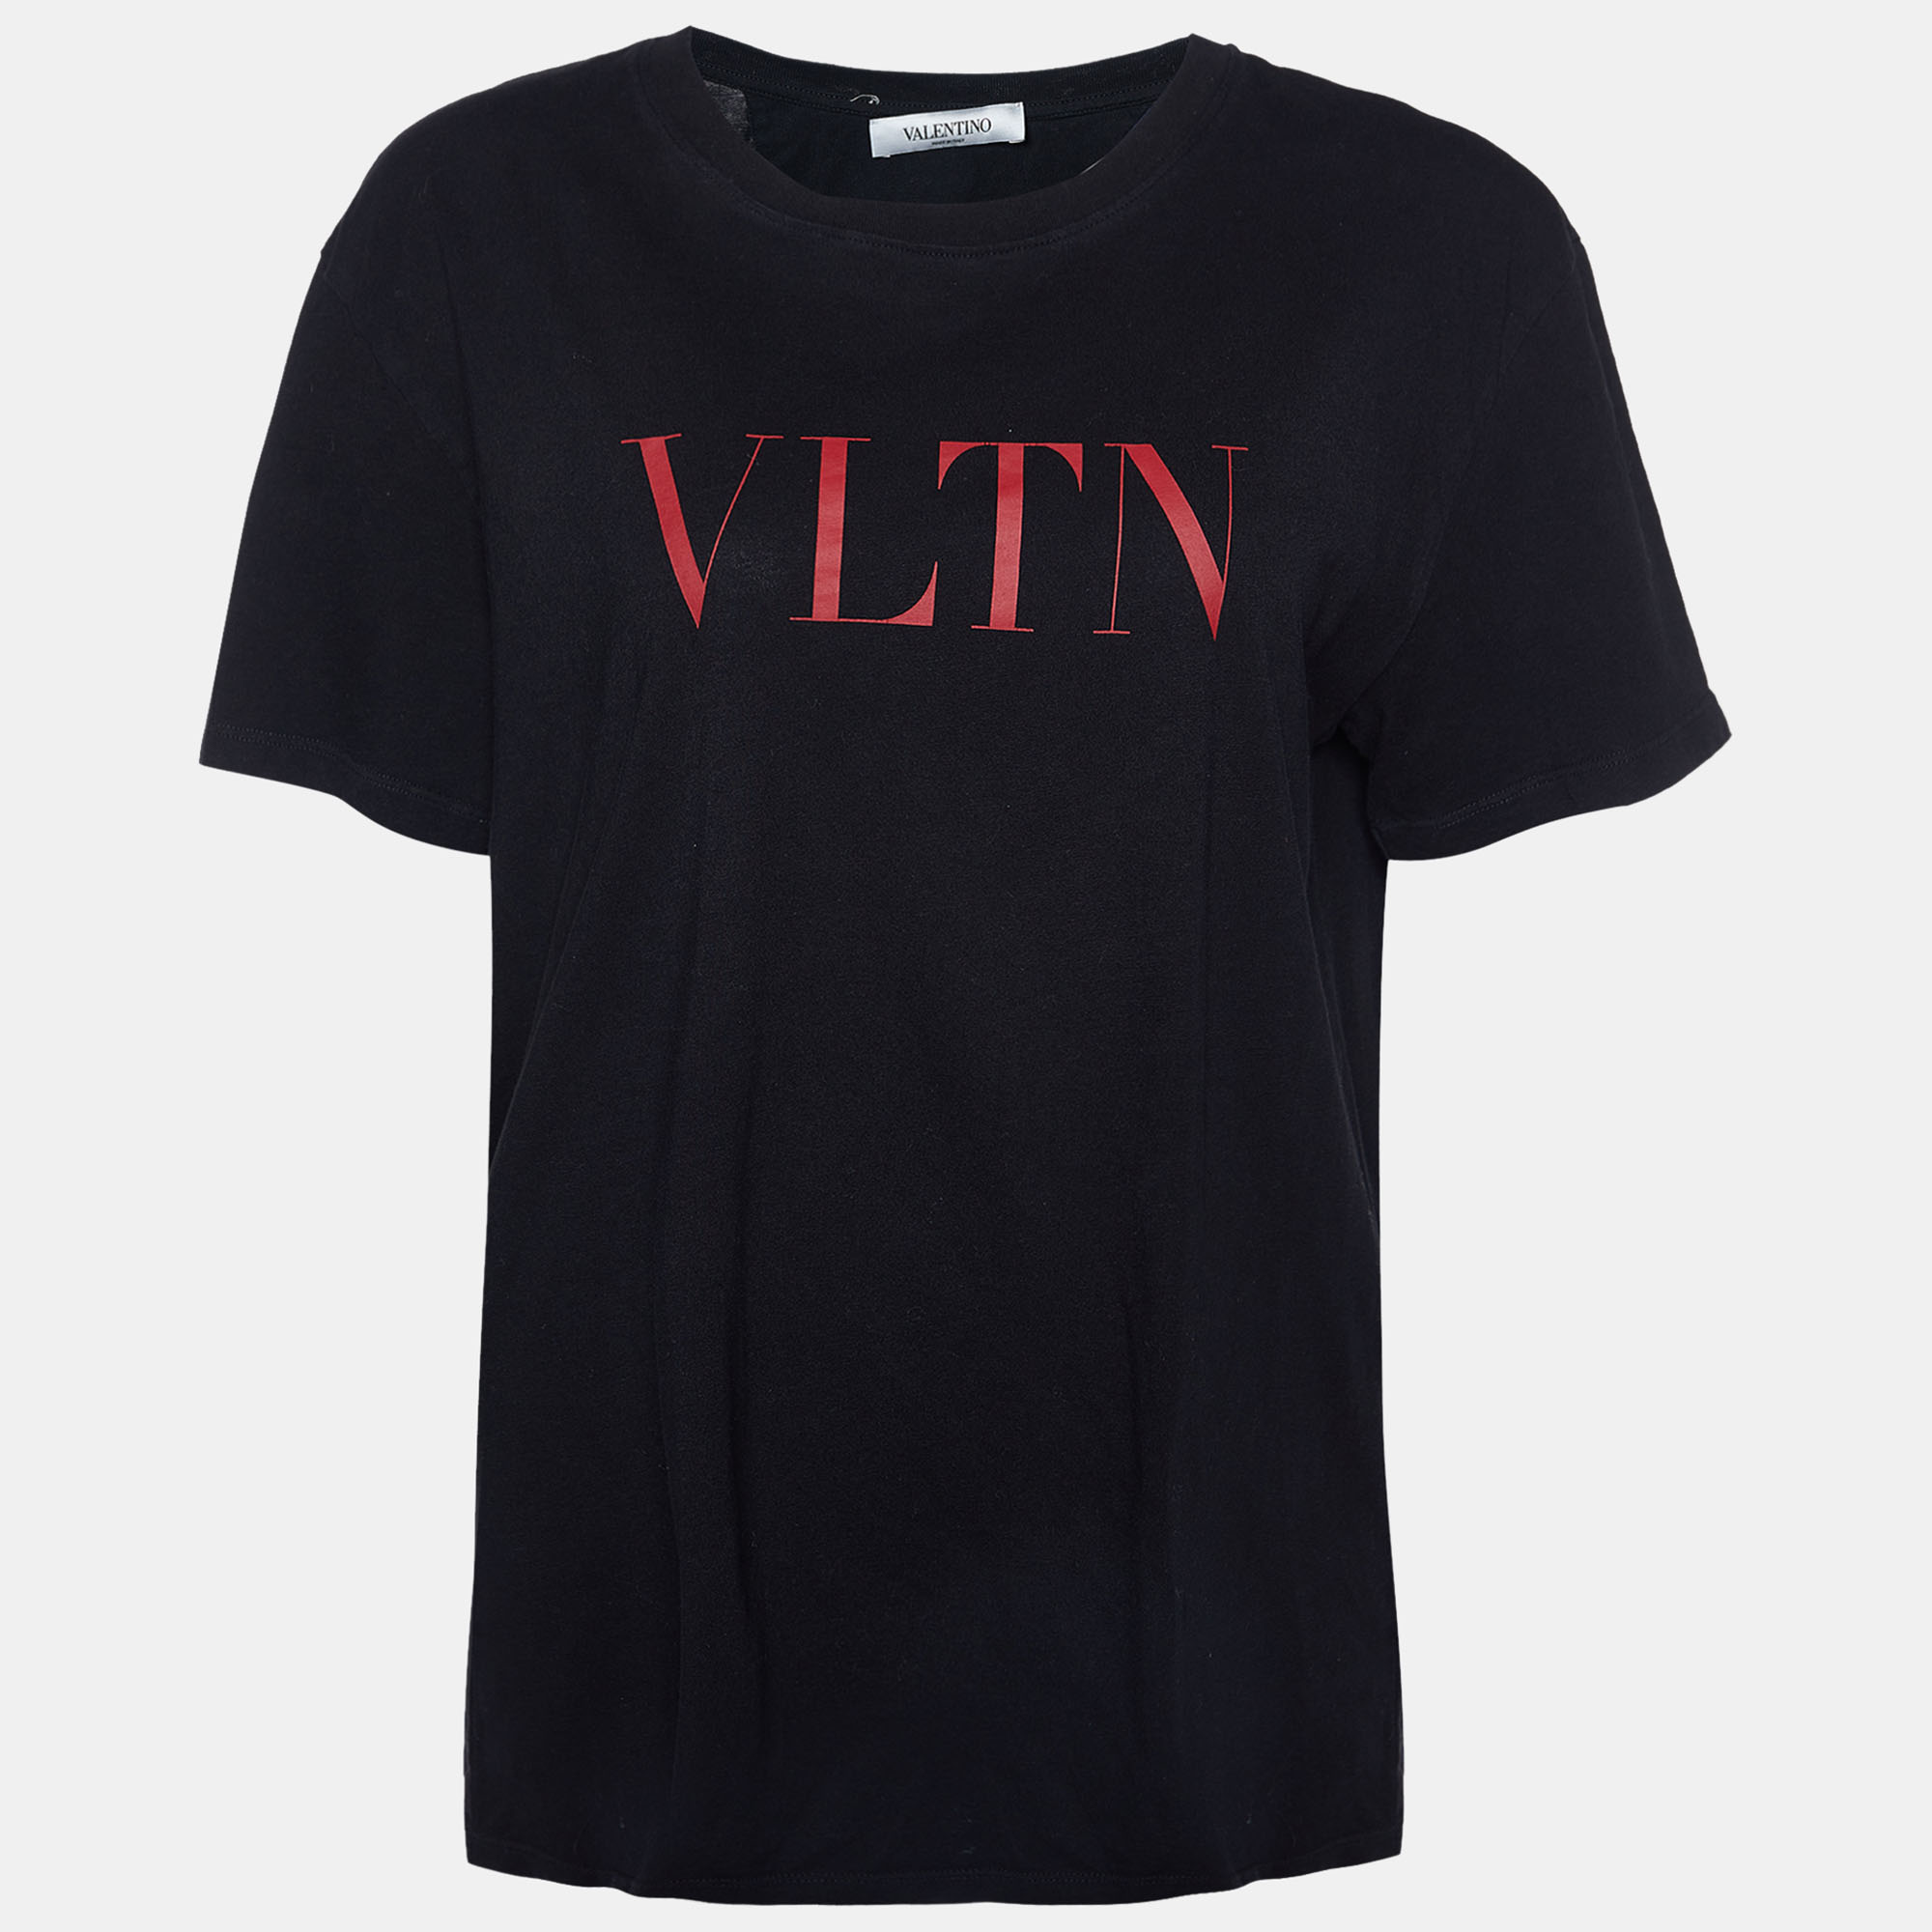 

Valentino Black VLTN Print Cotton Crew Neck T-Shirt